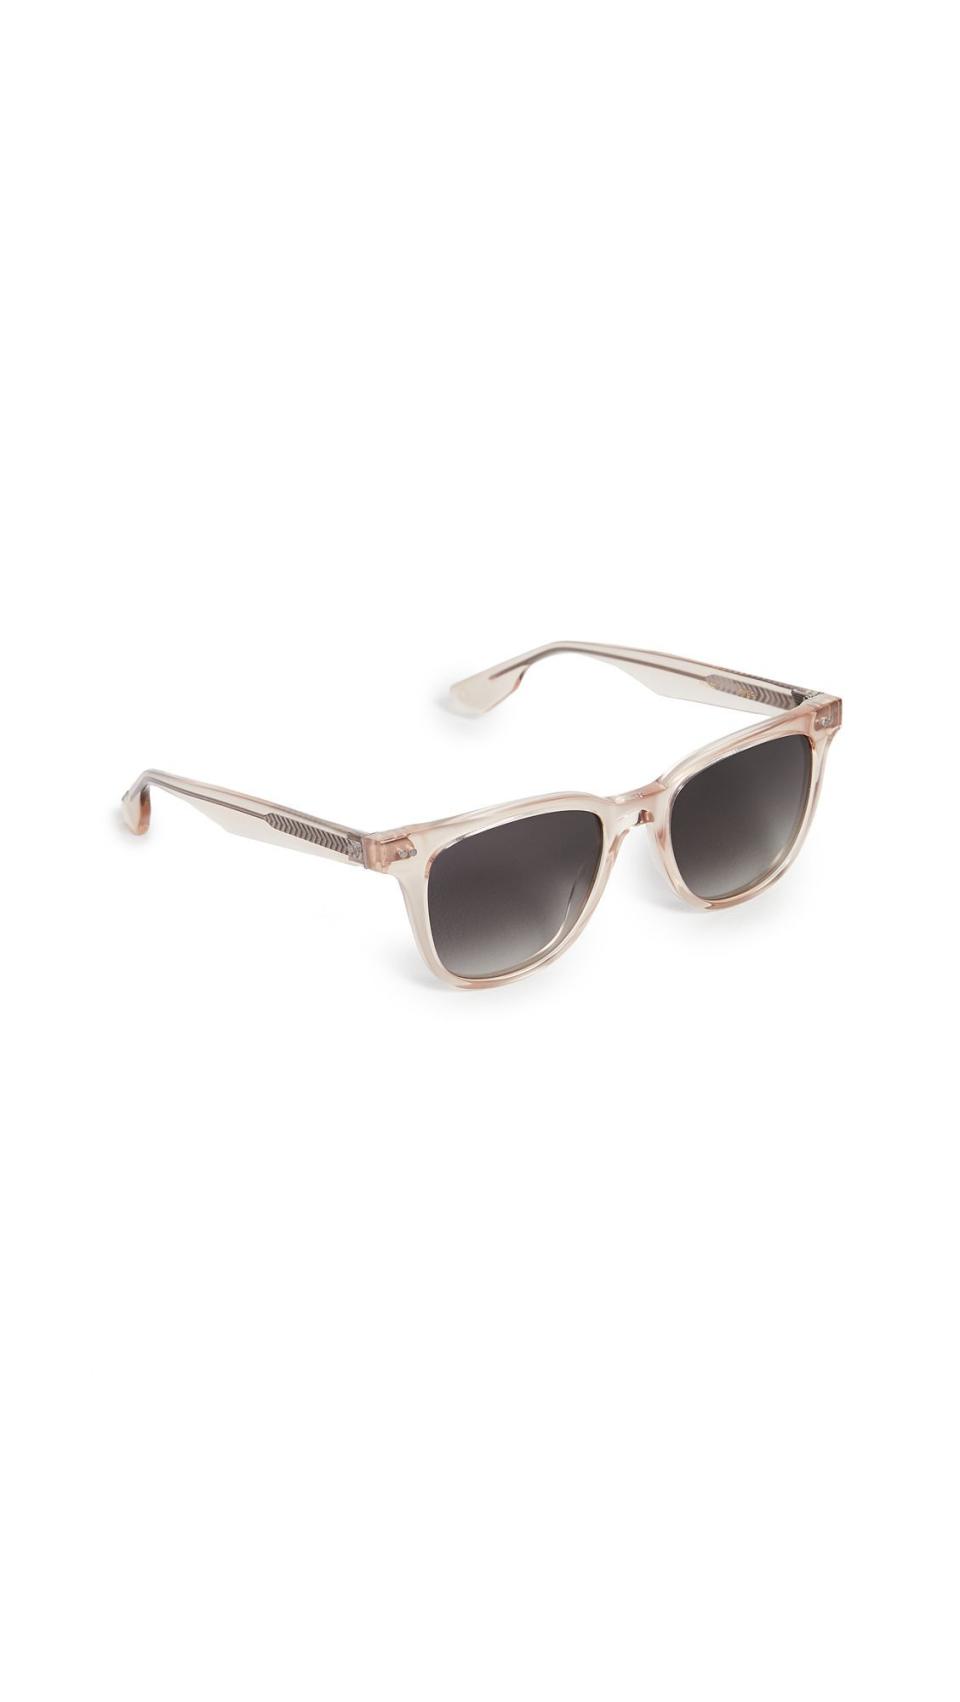 17) Pier Sunglasses